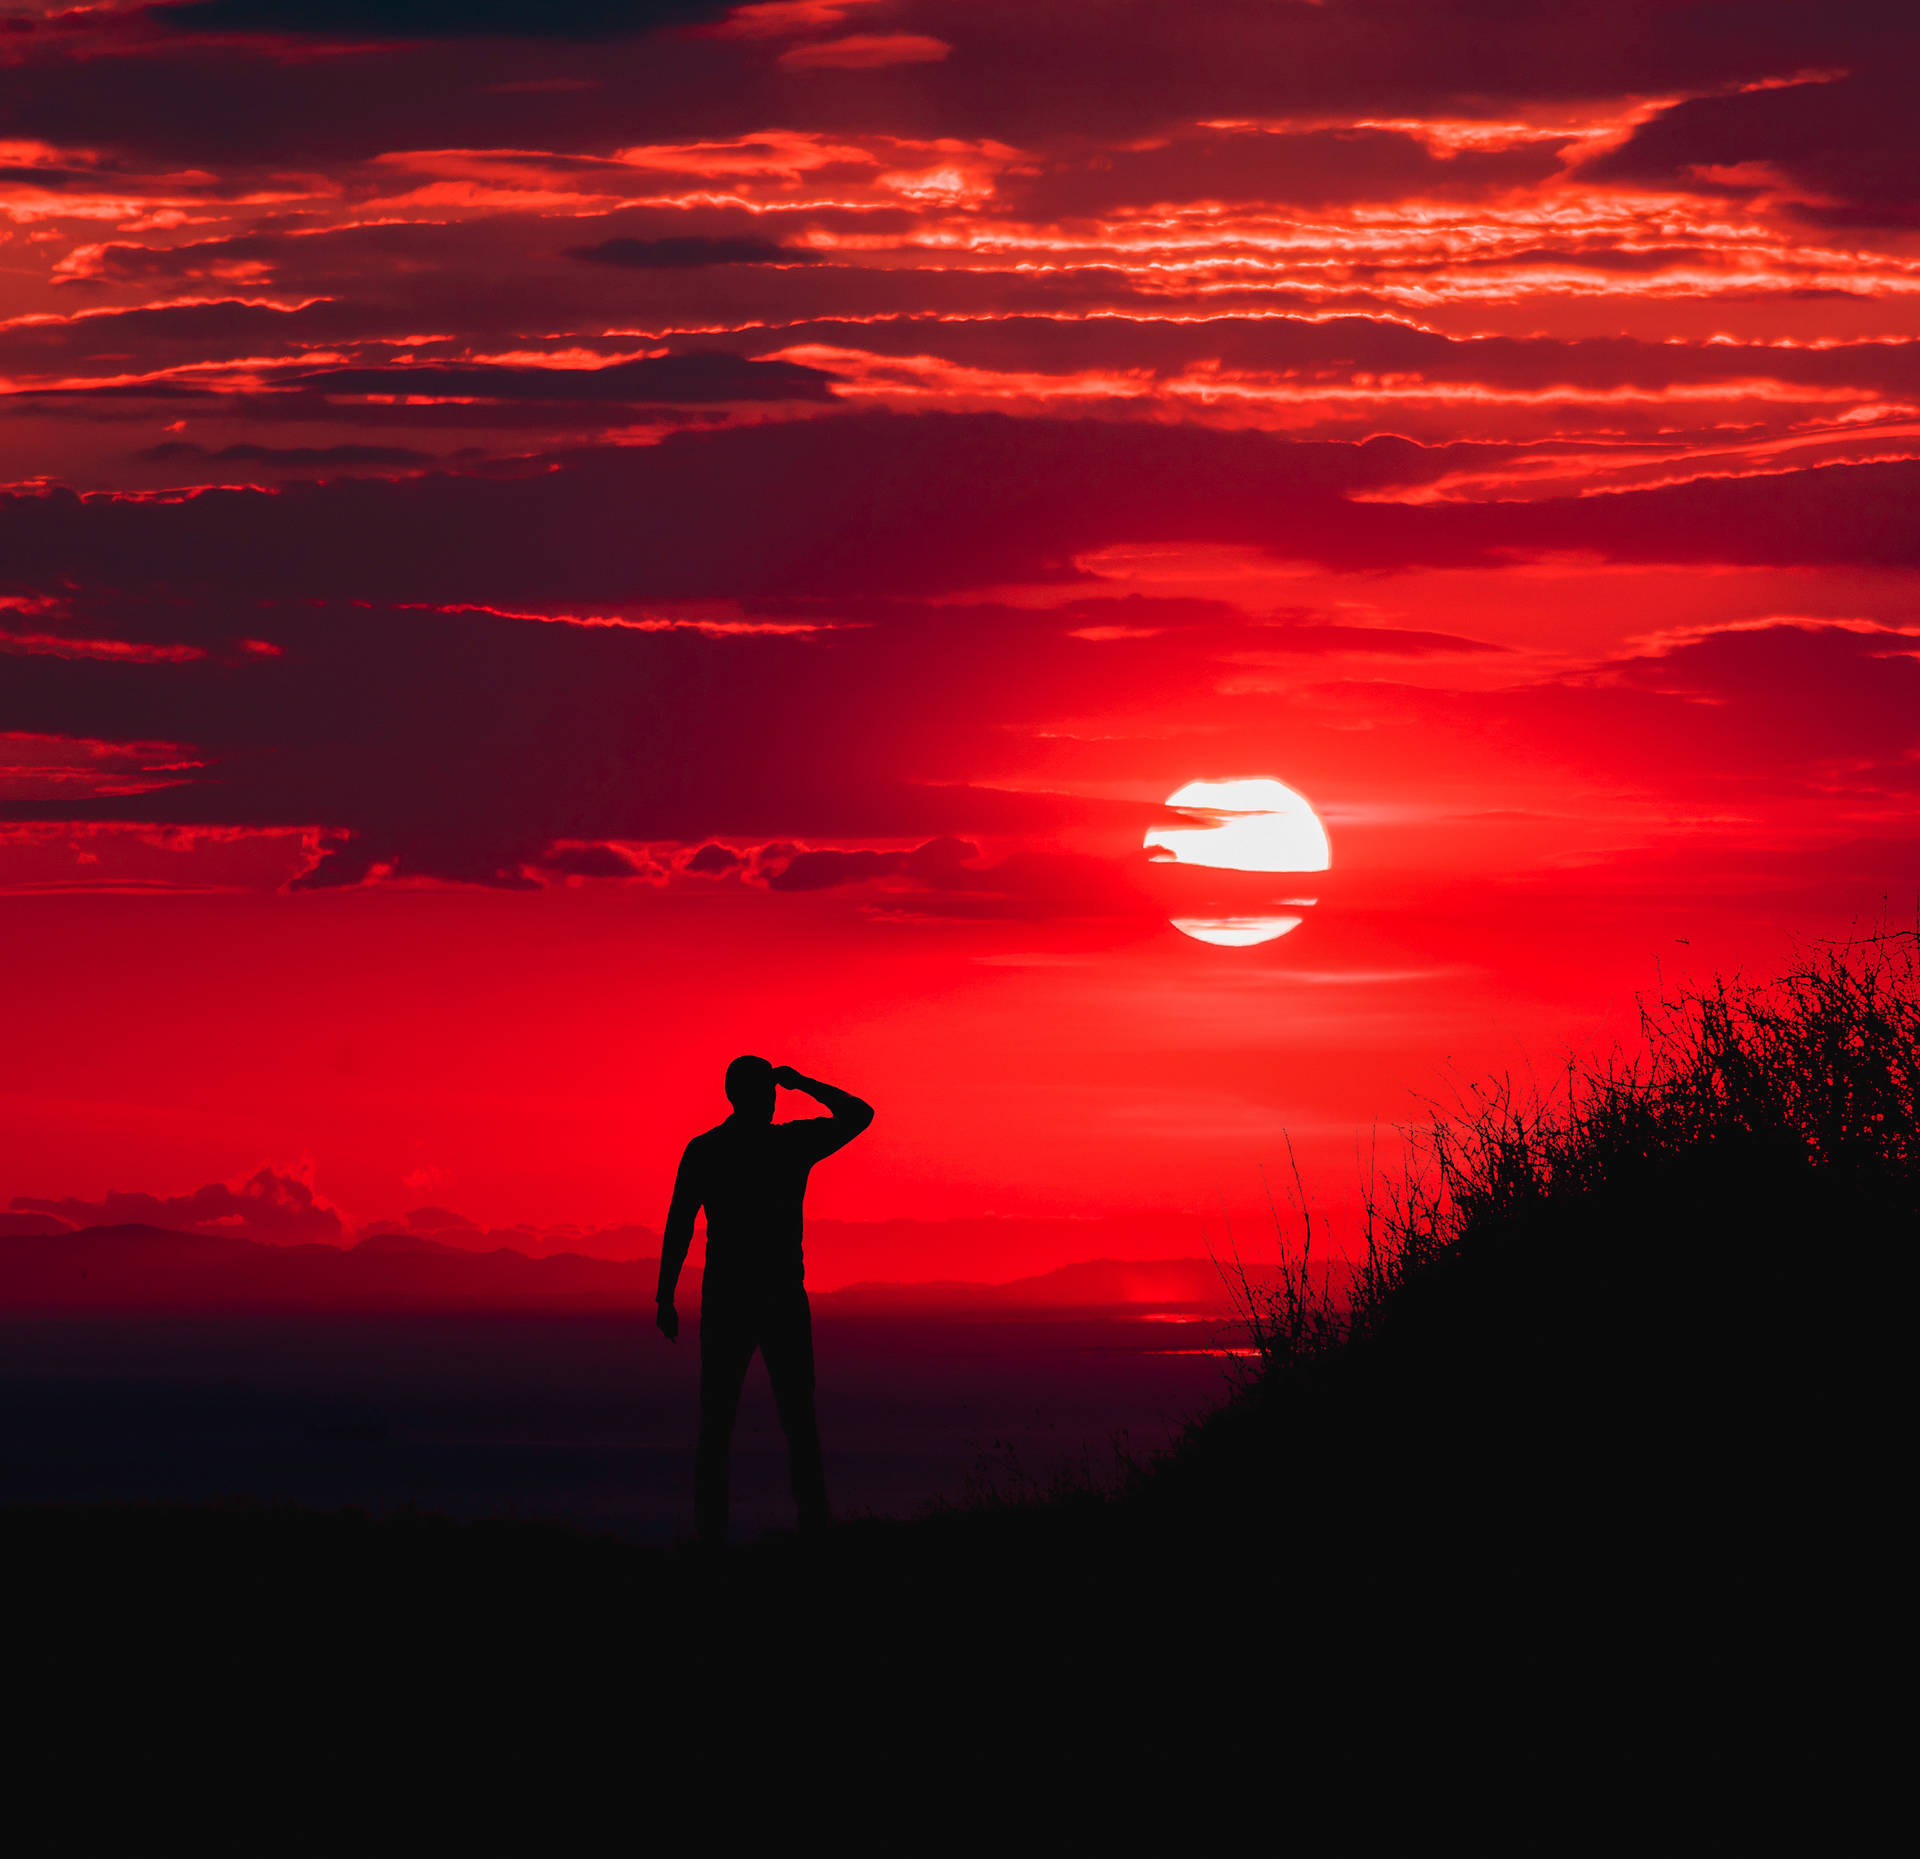 No Man's Sky In Reddish Sunset Background